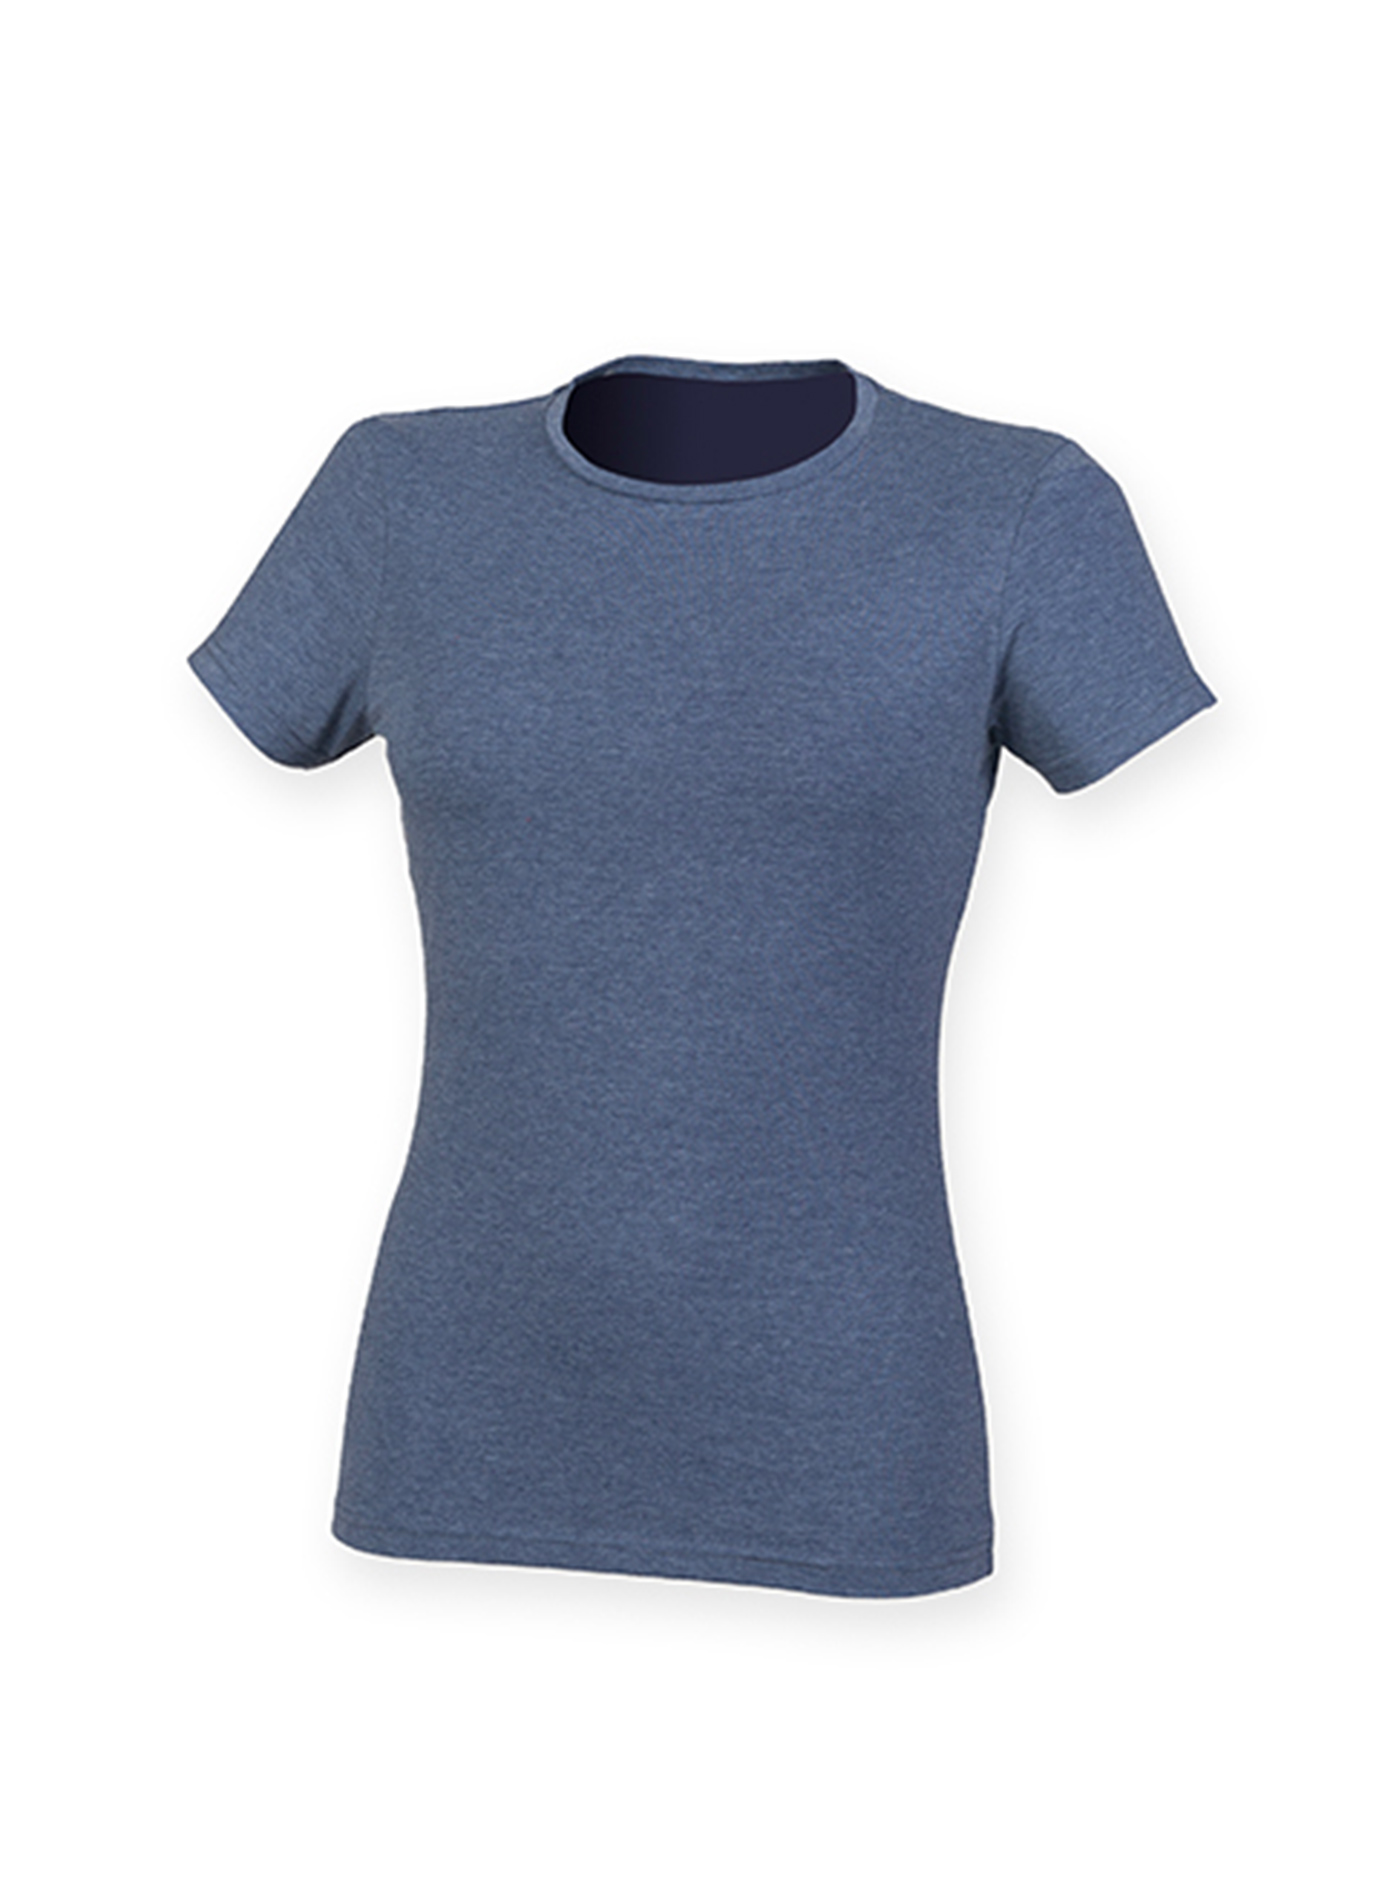 Dámské strečové tričko Skinnifit Feels Good - Tmavě modrá XL